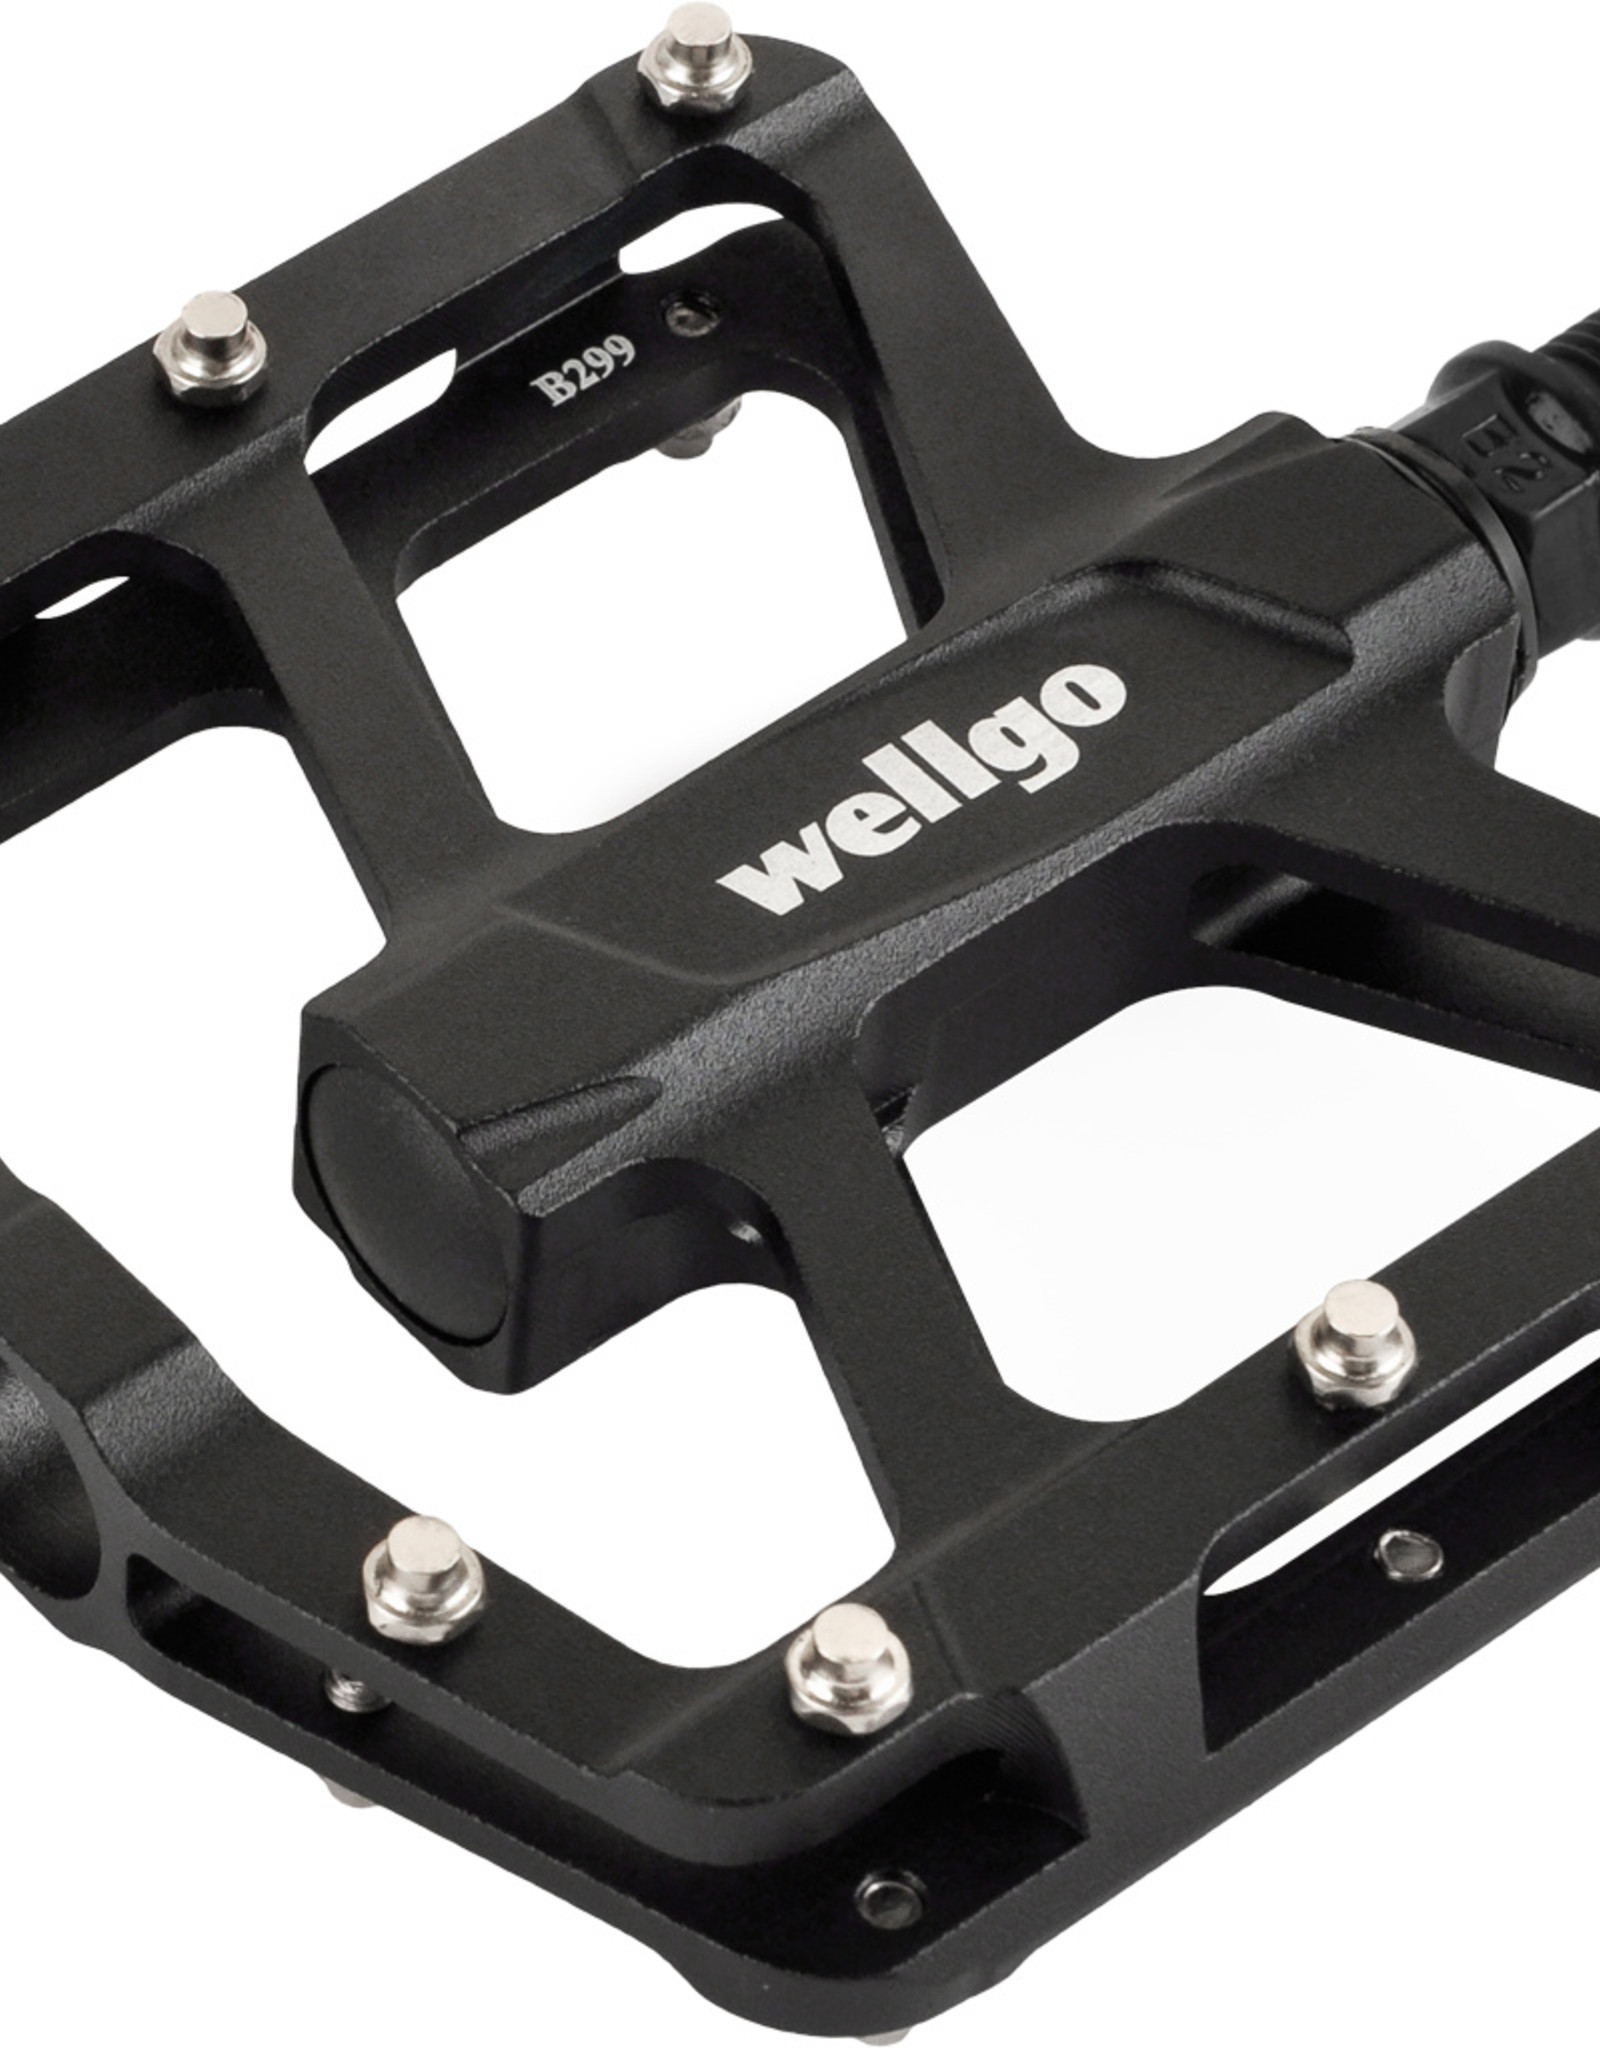 Wellgo 2DU Bearing - B299 Aluminium CNC Platform Pedal in Black